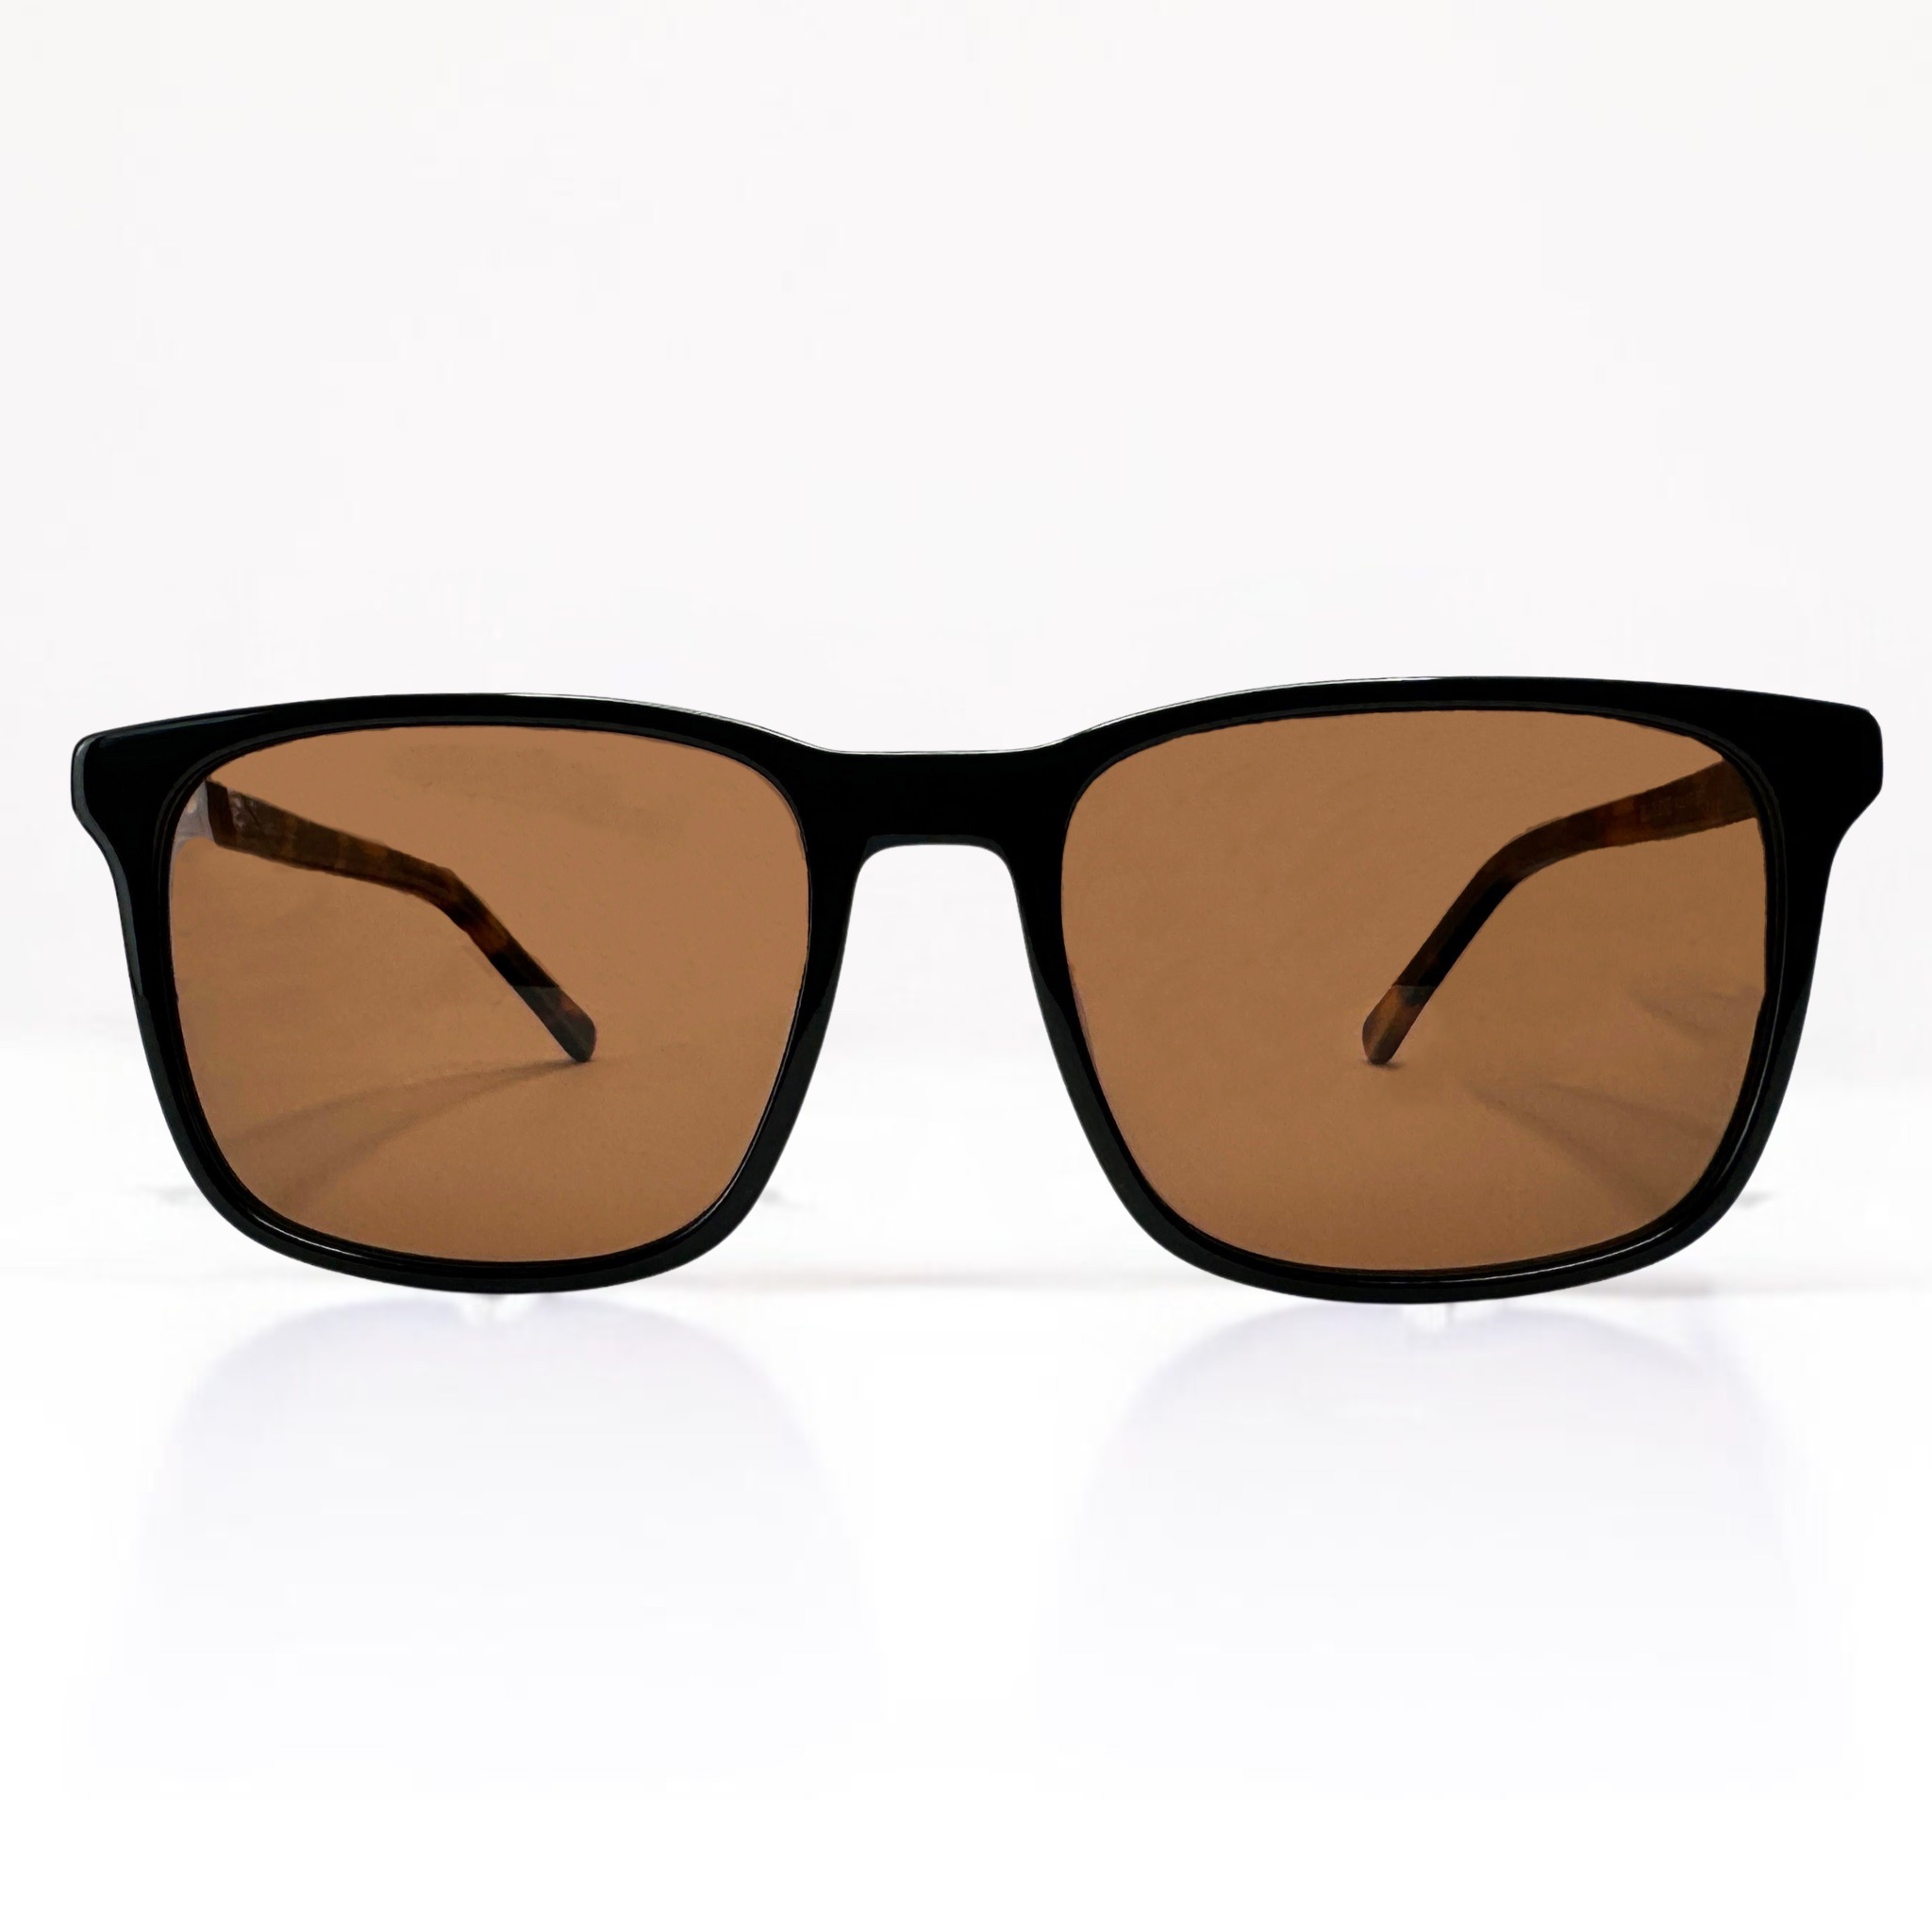 Citadel Gold + Silver Lens Non-Polarized | Sunglasses, Sunglasses shop,  Glasses for your face shape